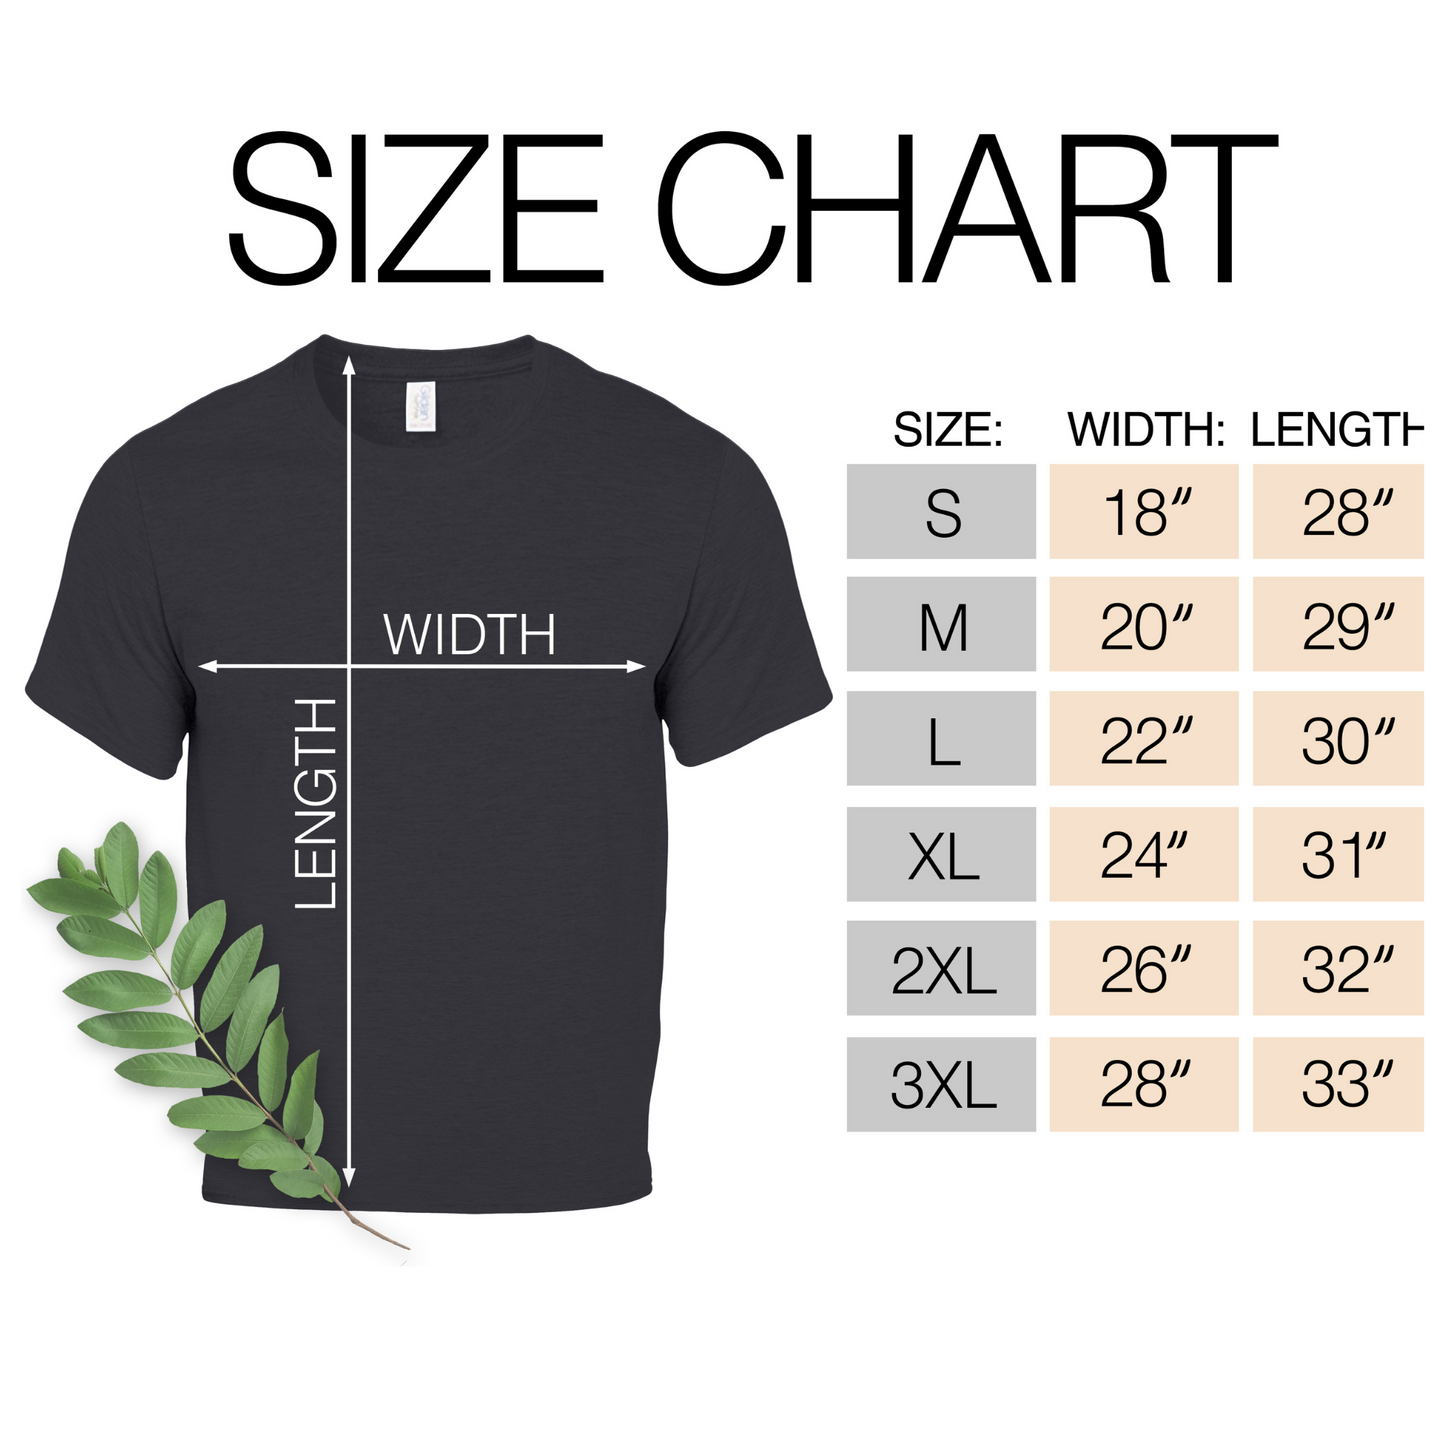 Short sleeve tee size chart